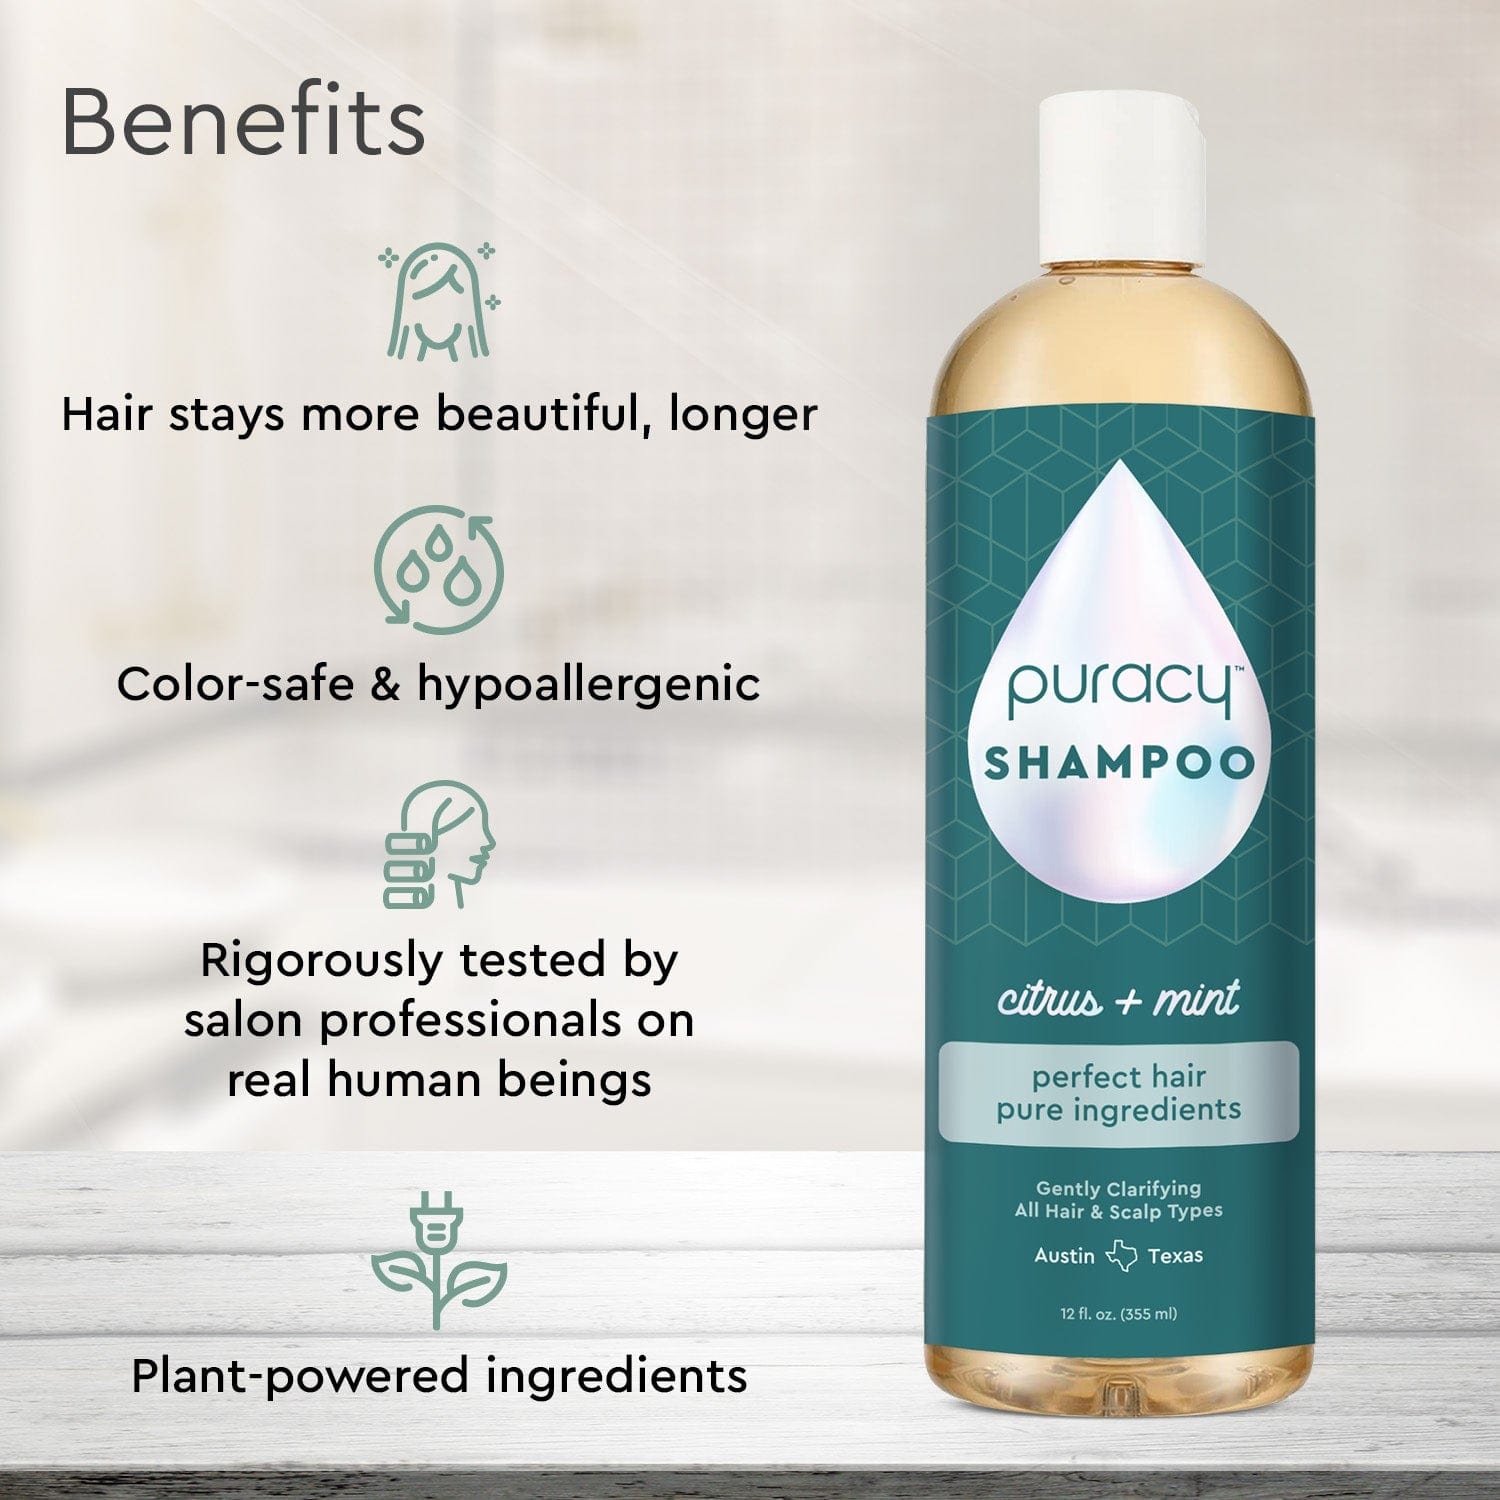 Benefits of Puracy Natural Shampoo